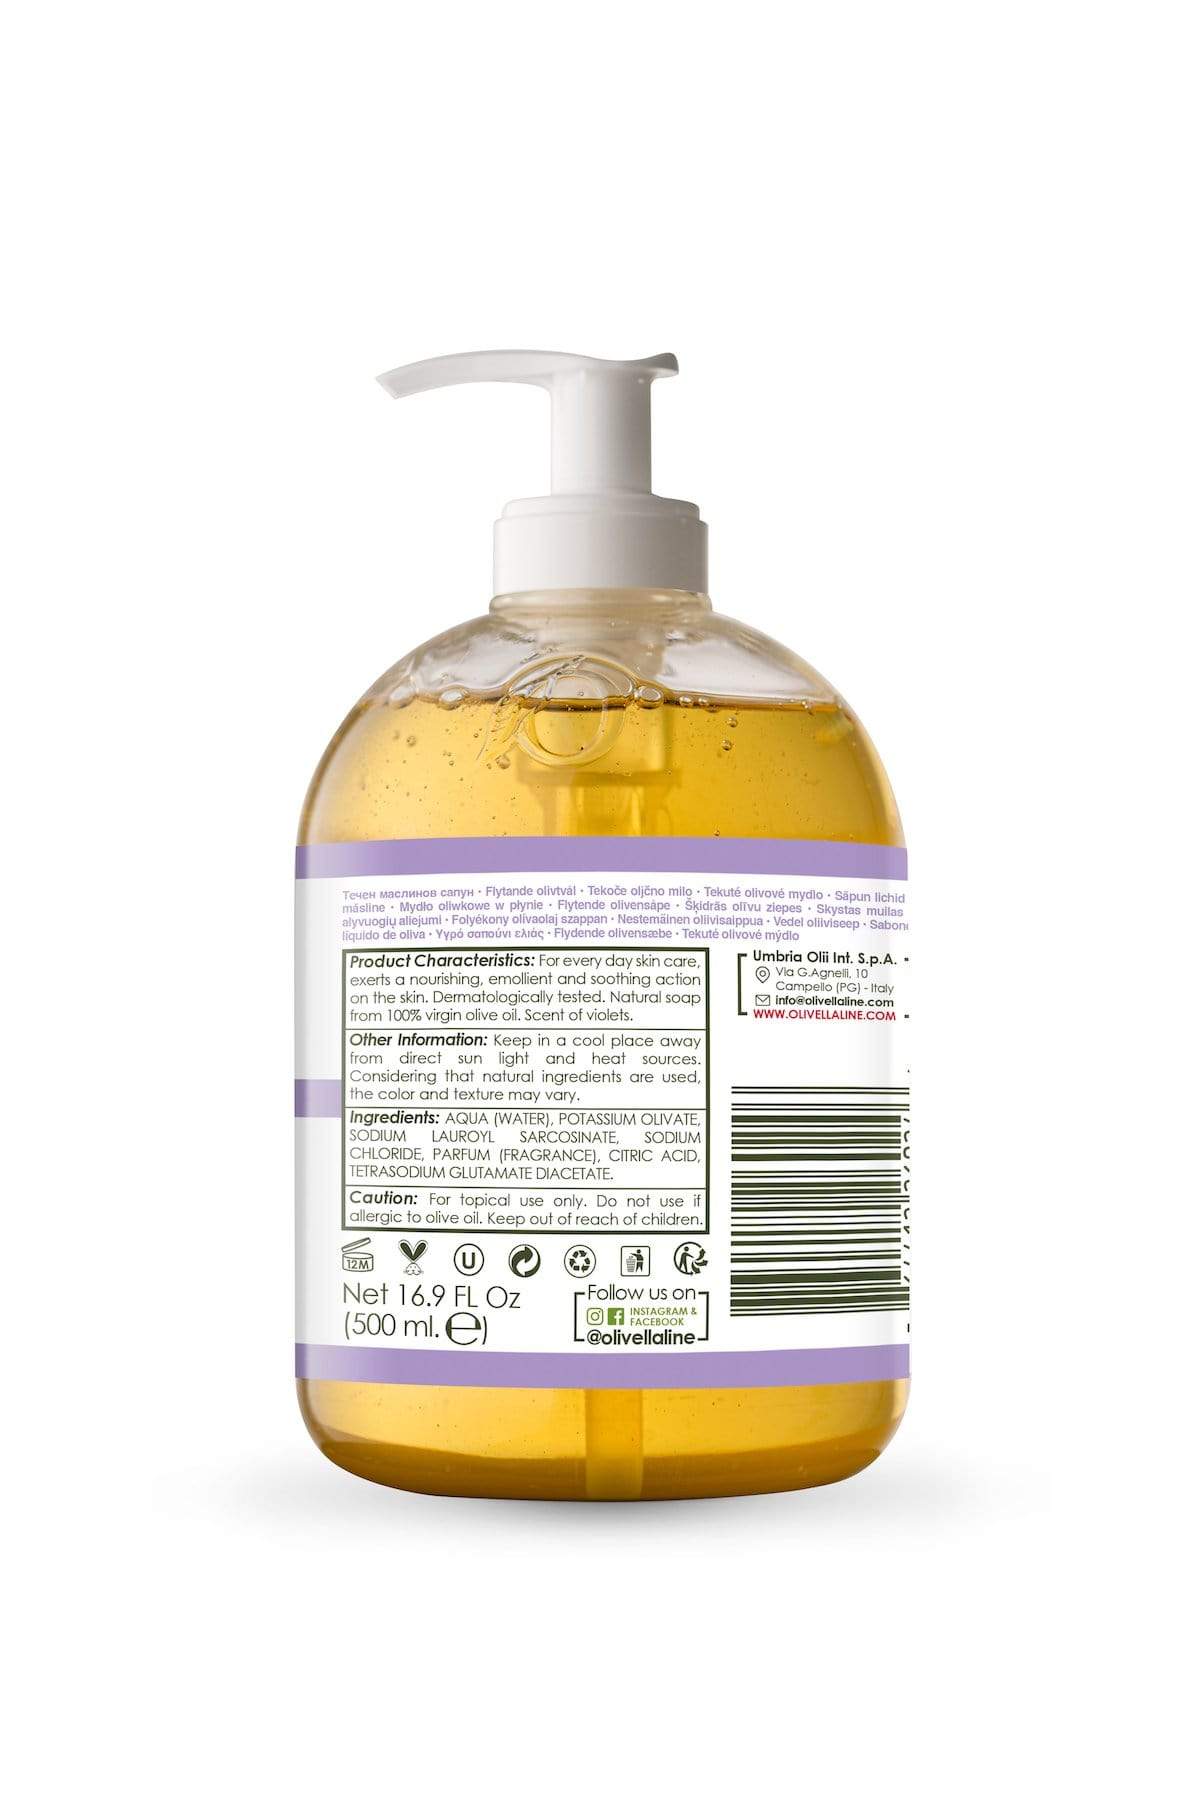 Olivella Face & Body Liquid Soap - Violet 16.9 Oz - Olivella